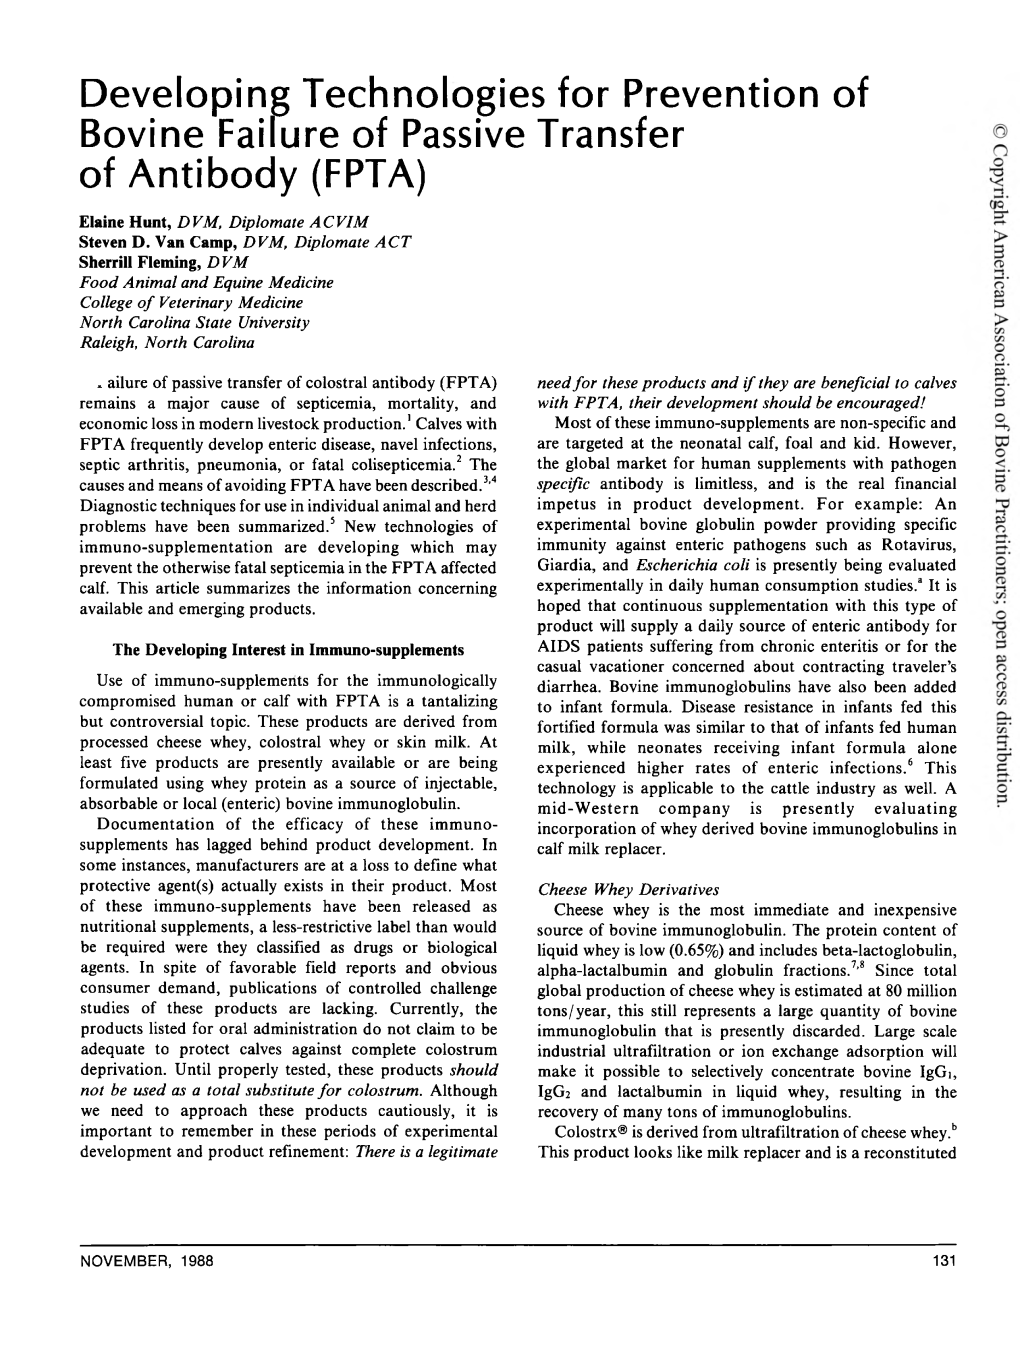 Developing Technologies for Prevention of Bovine Failure of Passive Transfer of Antibody (FPTA)